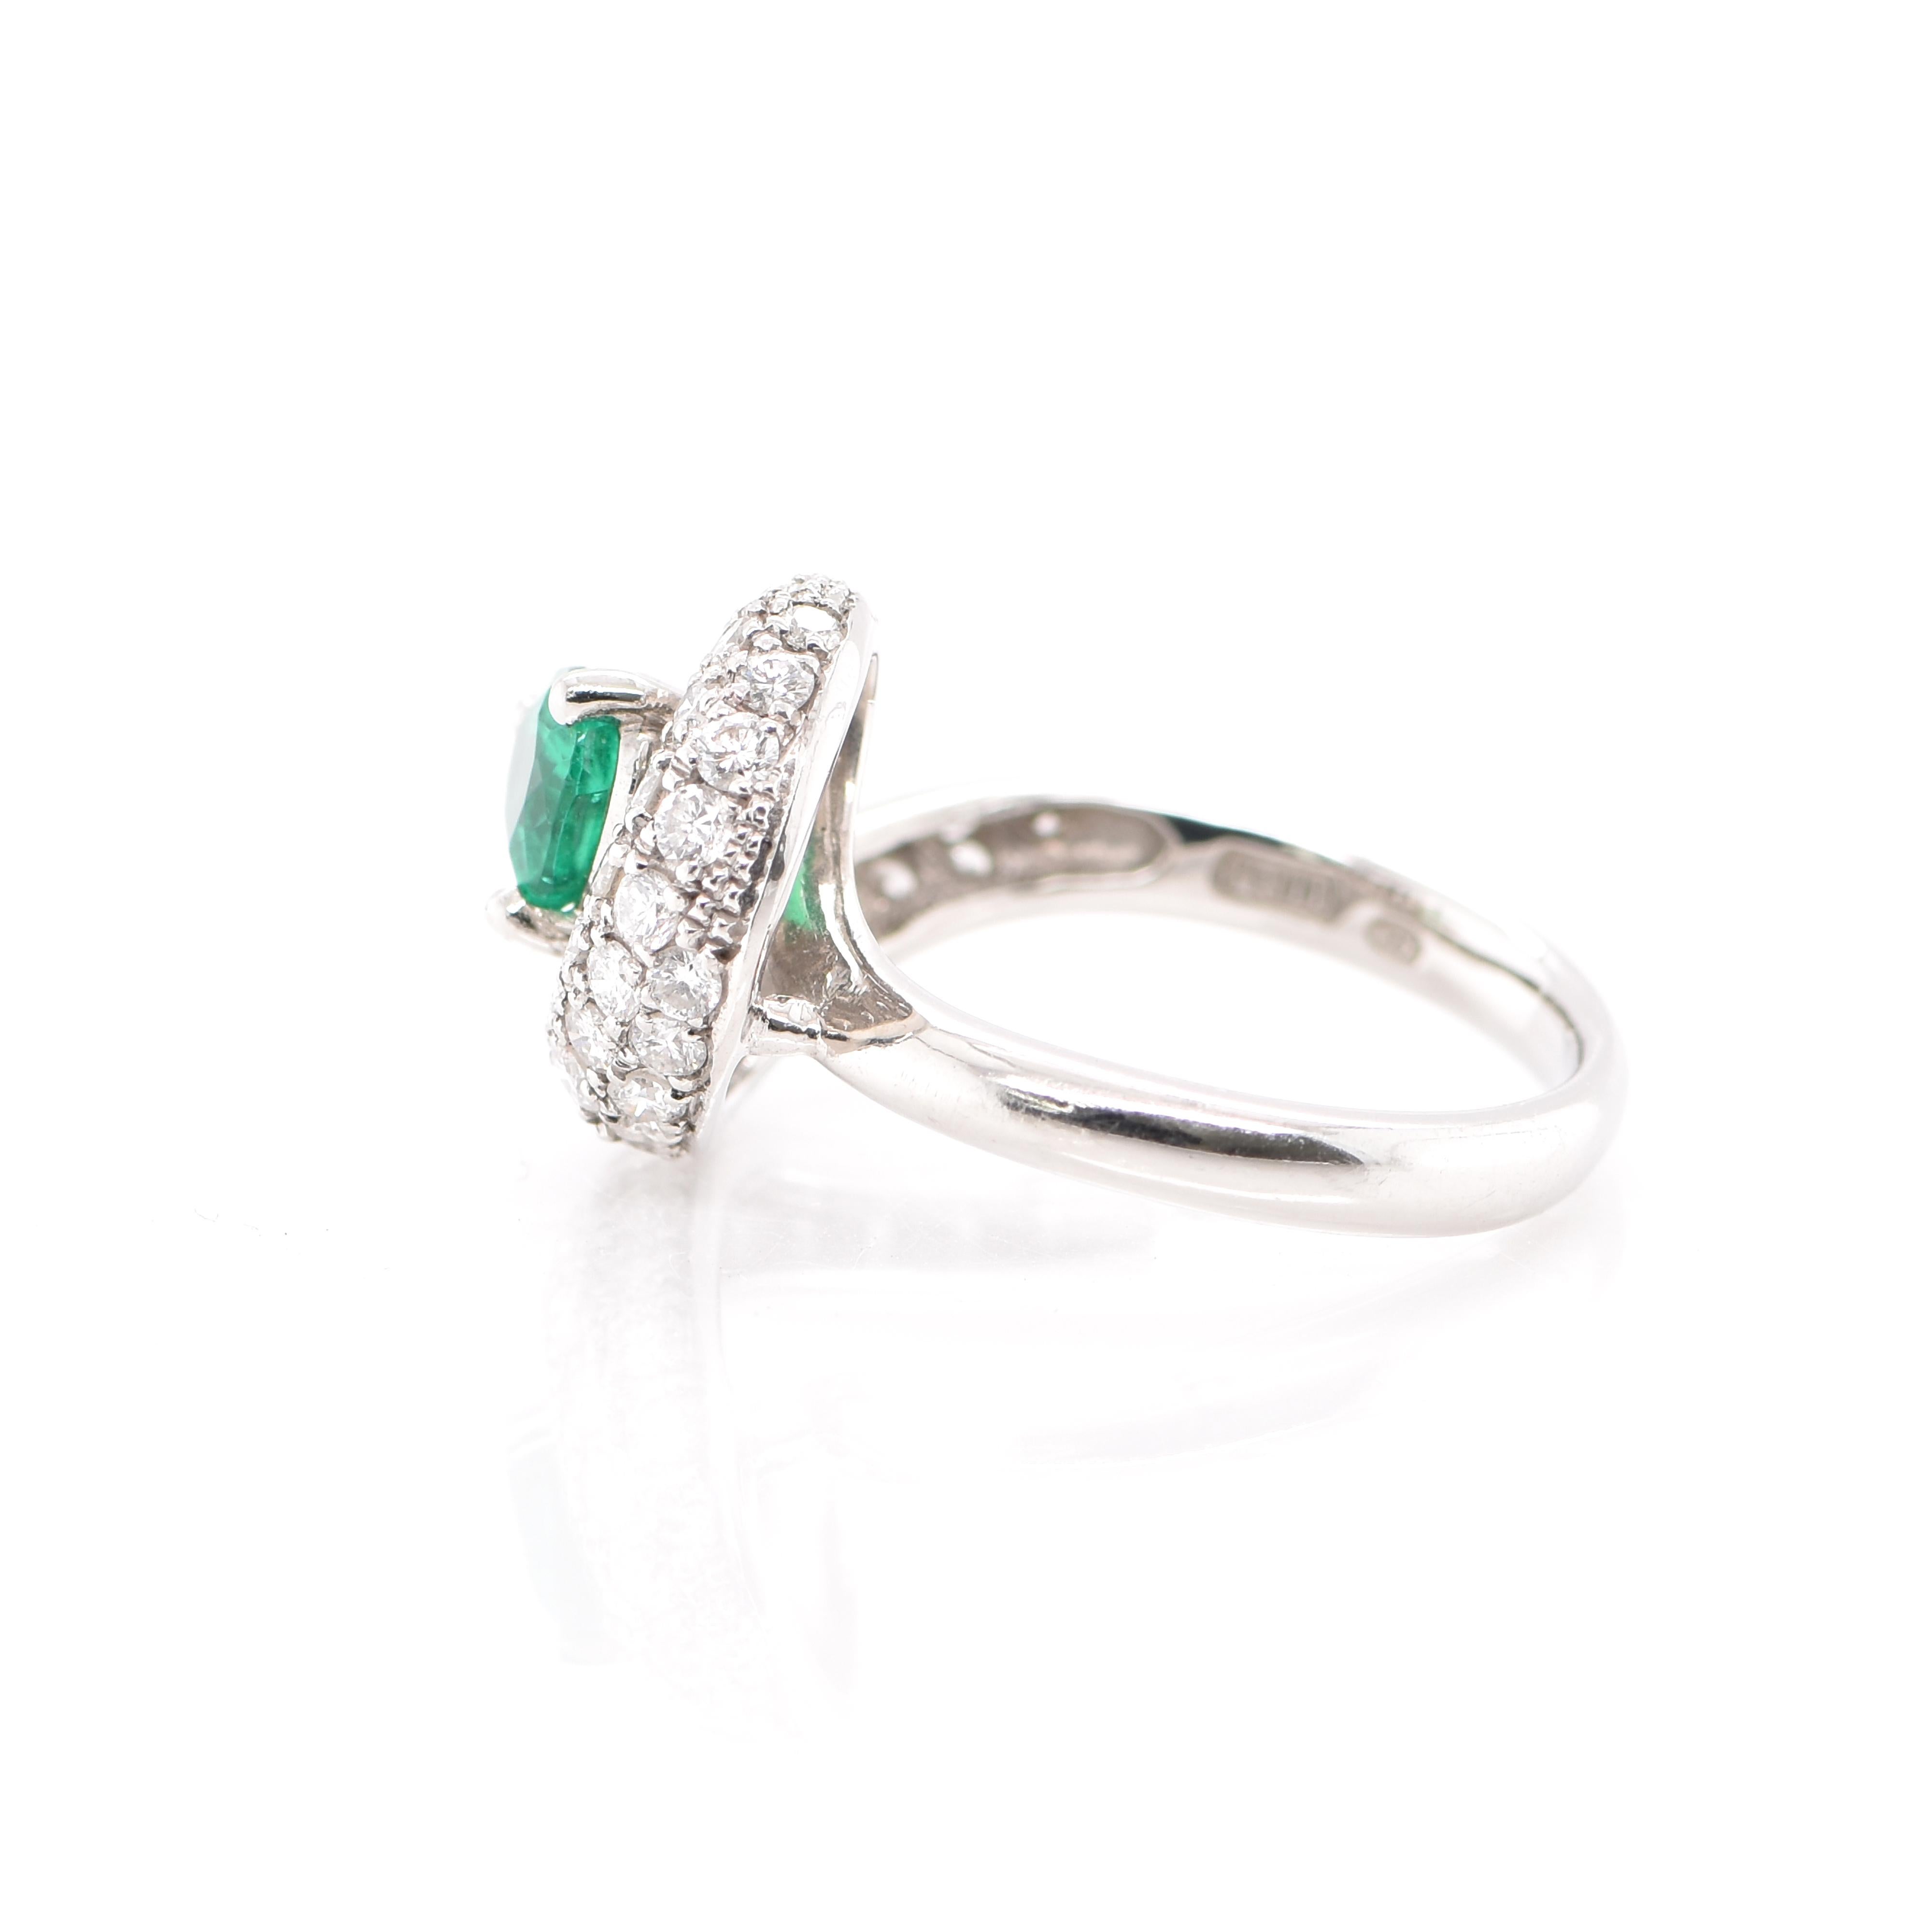 Trillion Cut 0.64 Carat Natural Emerald and Diamond Ring Set in Platinum